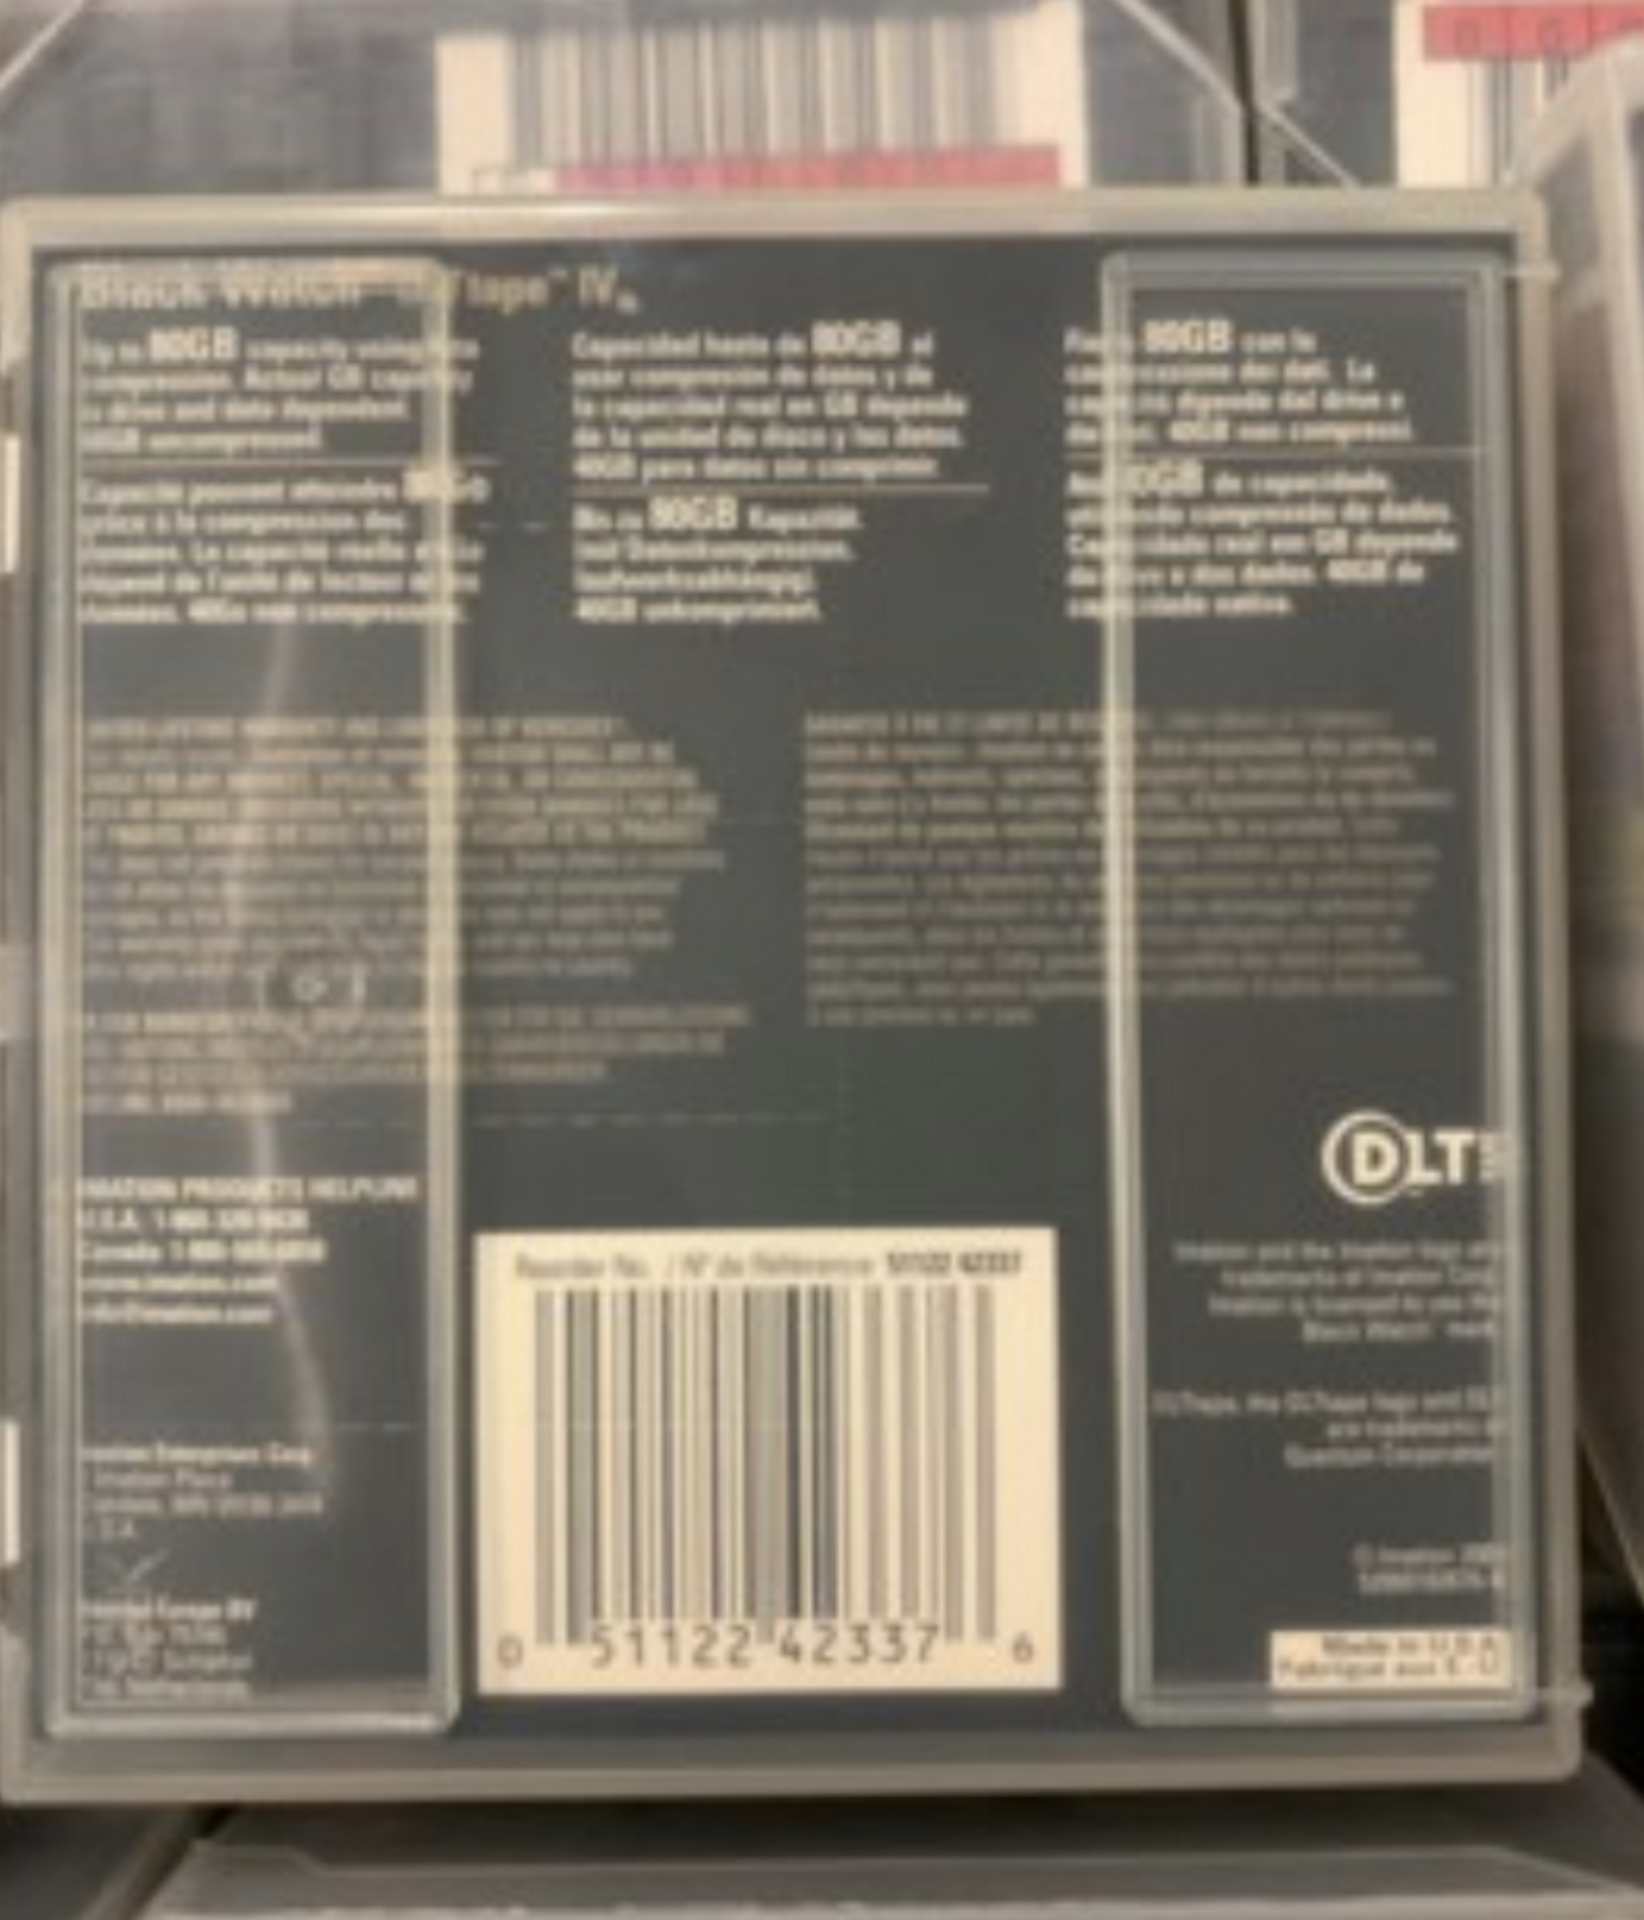 Large lot of Imation DLT Tape IV 80GB Cartridges - Image 4 of 6